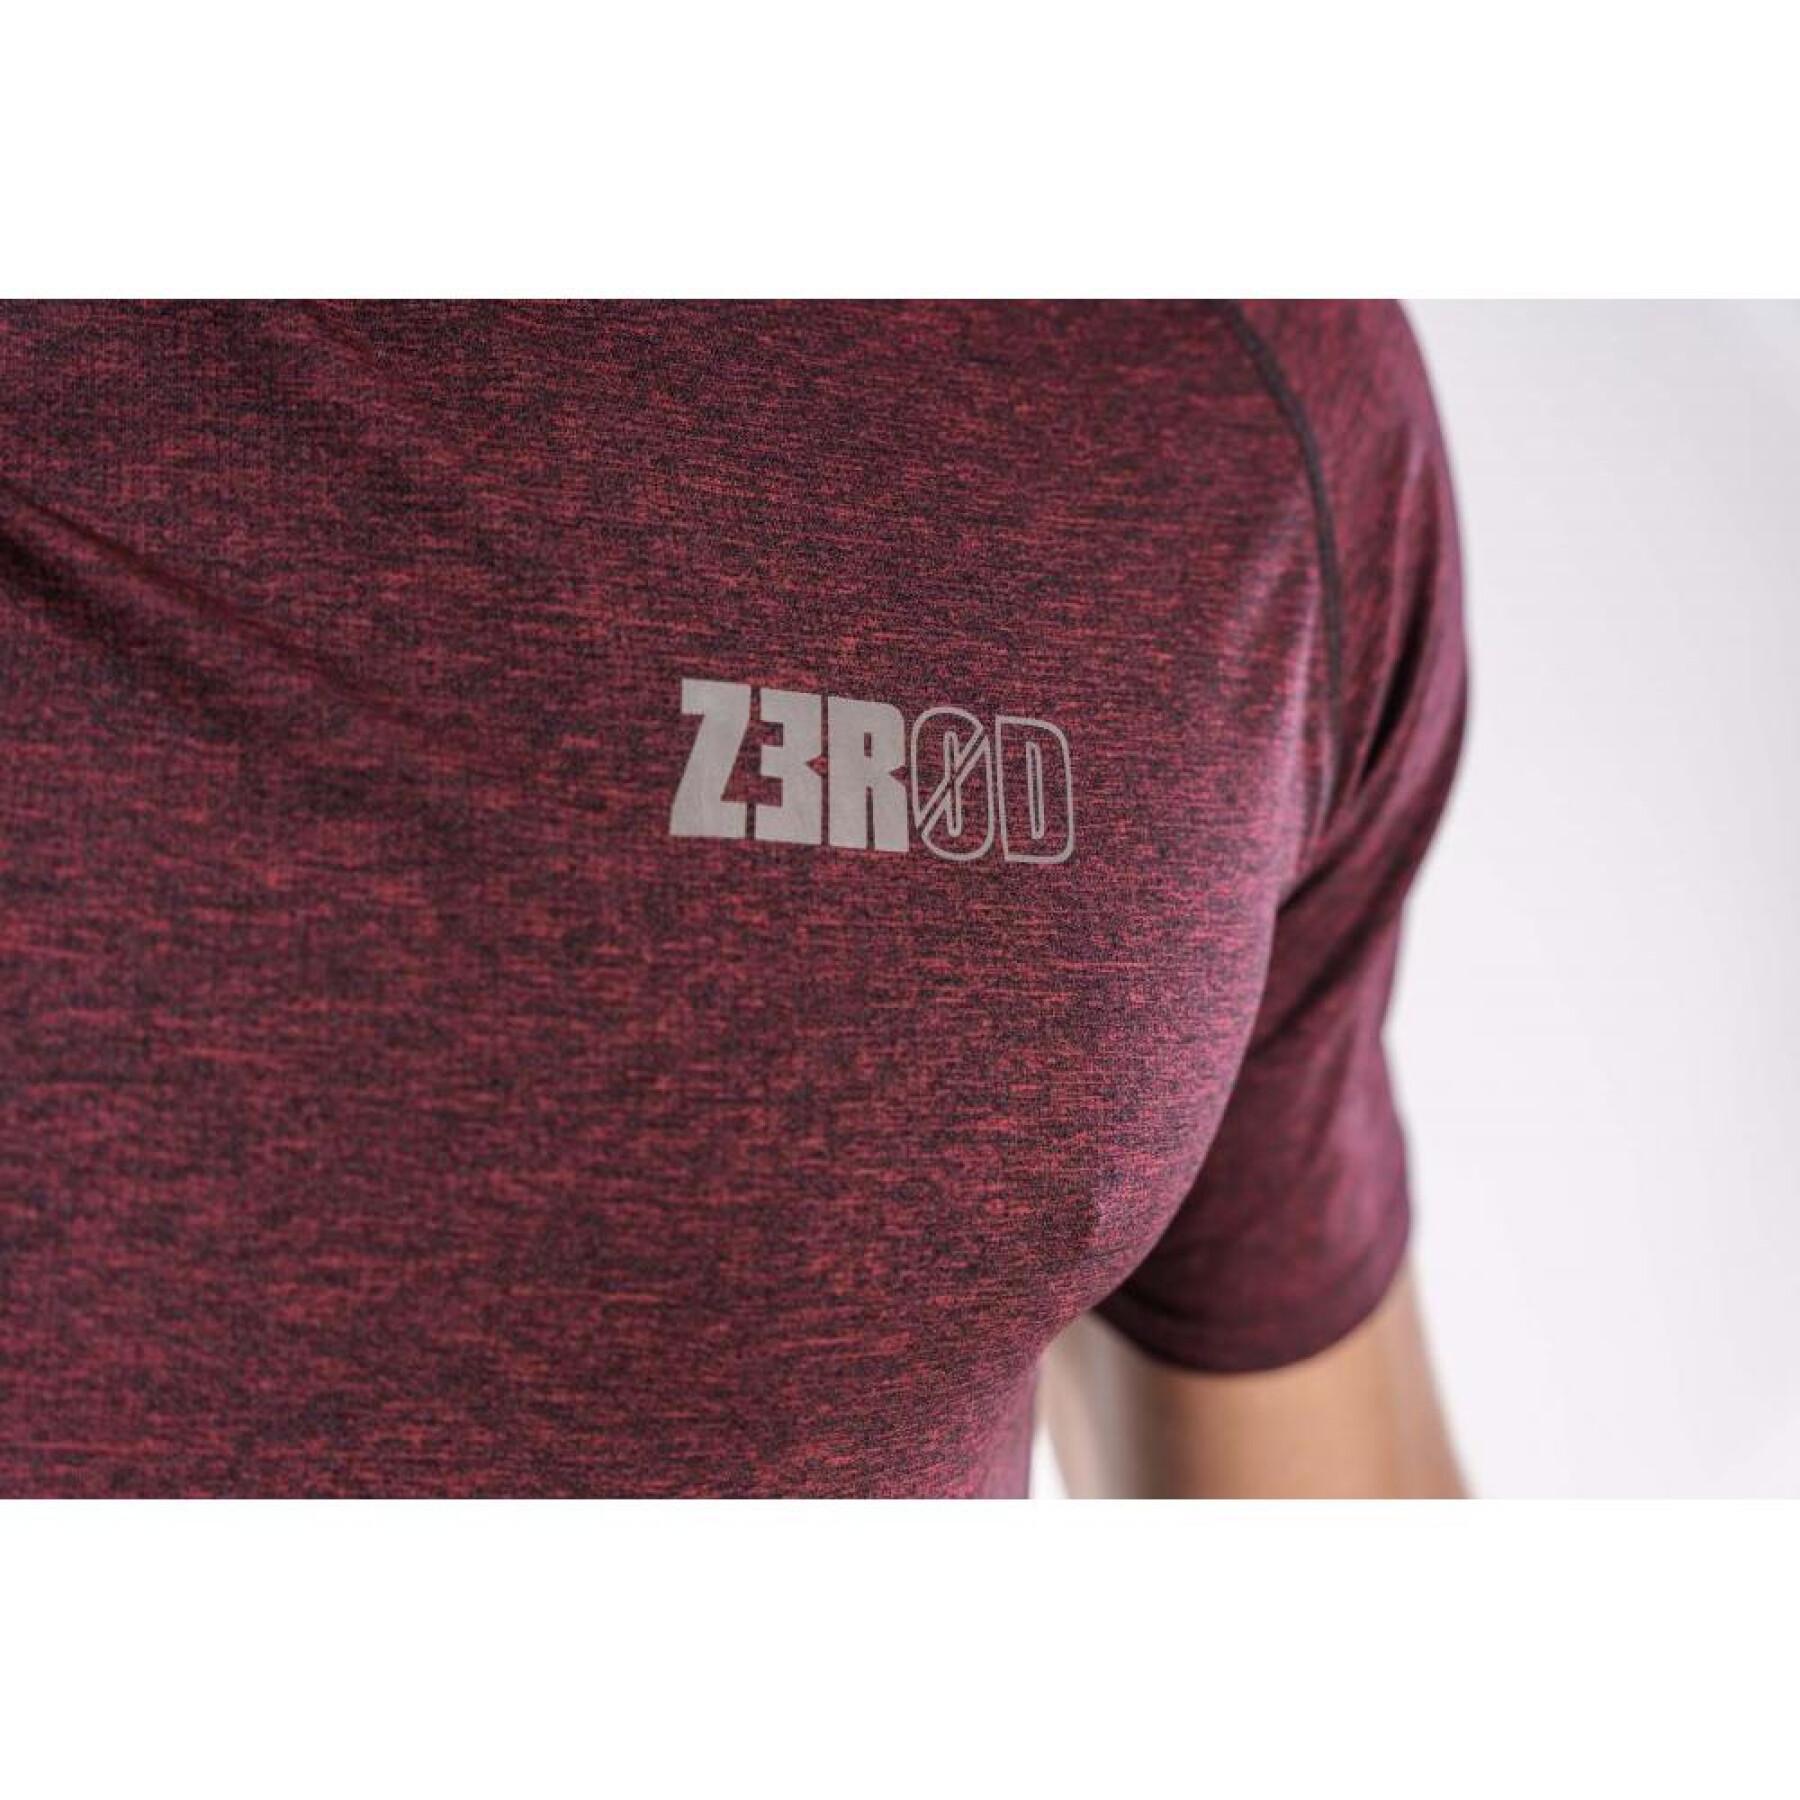 Camiseta Z3R0D Duotech